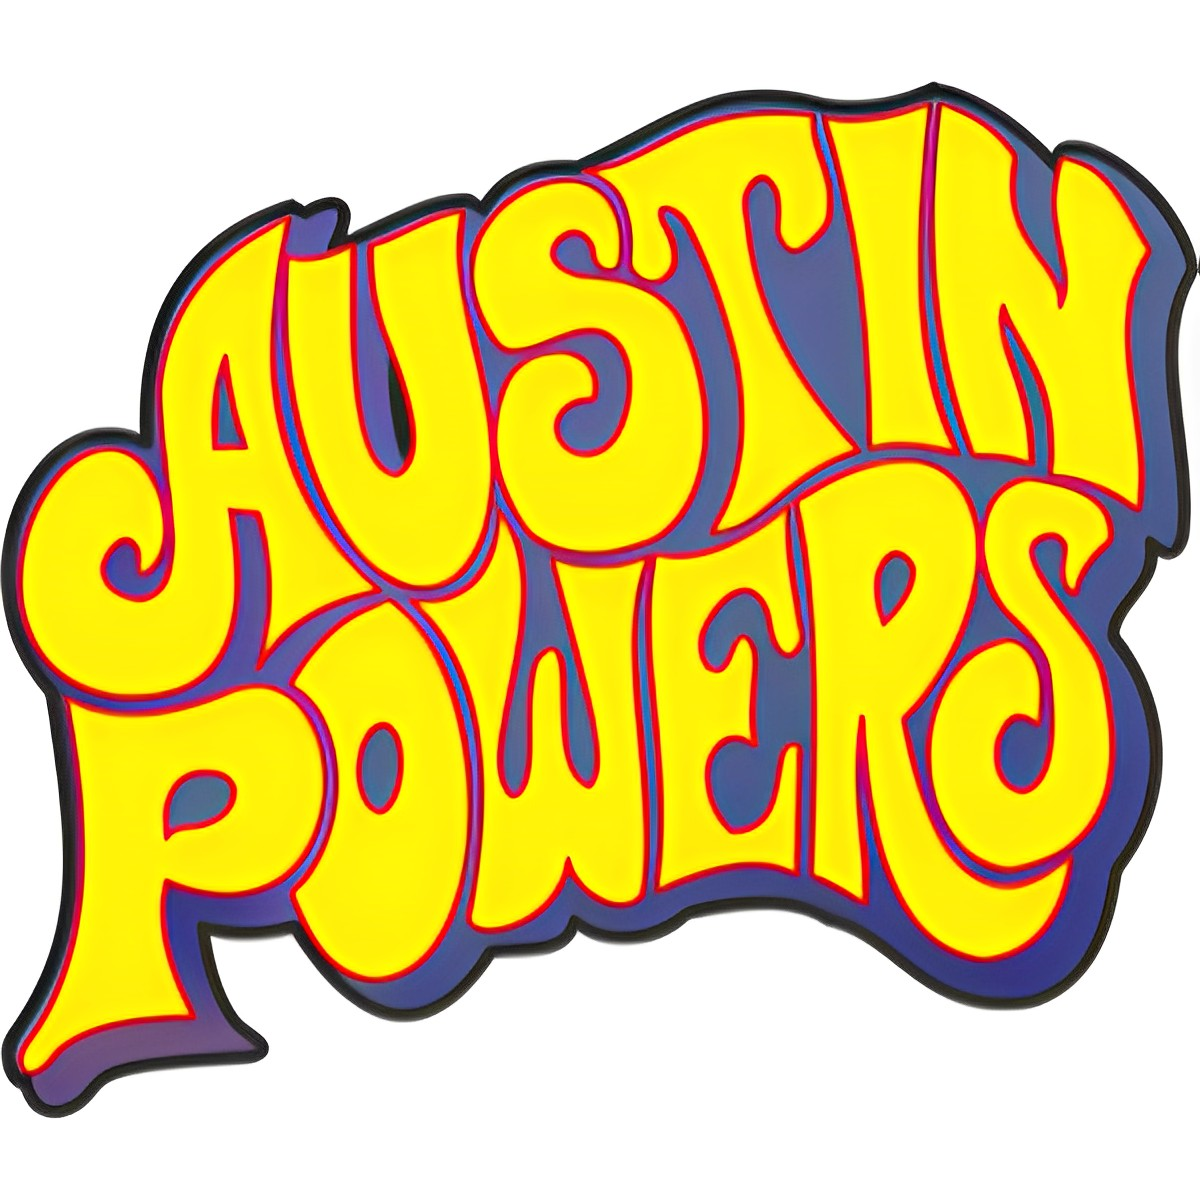 Austin Powers Logo